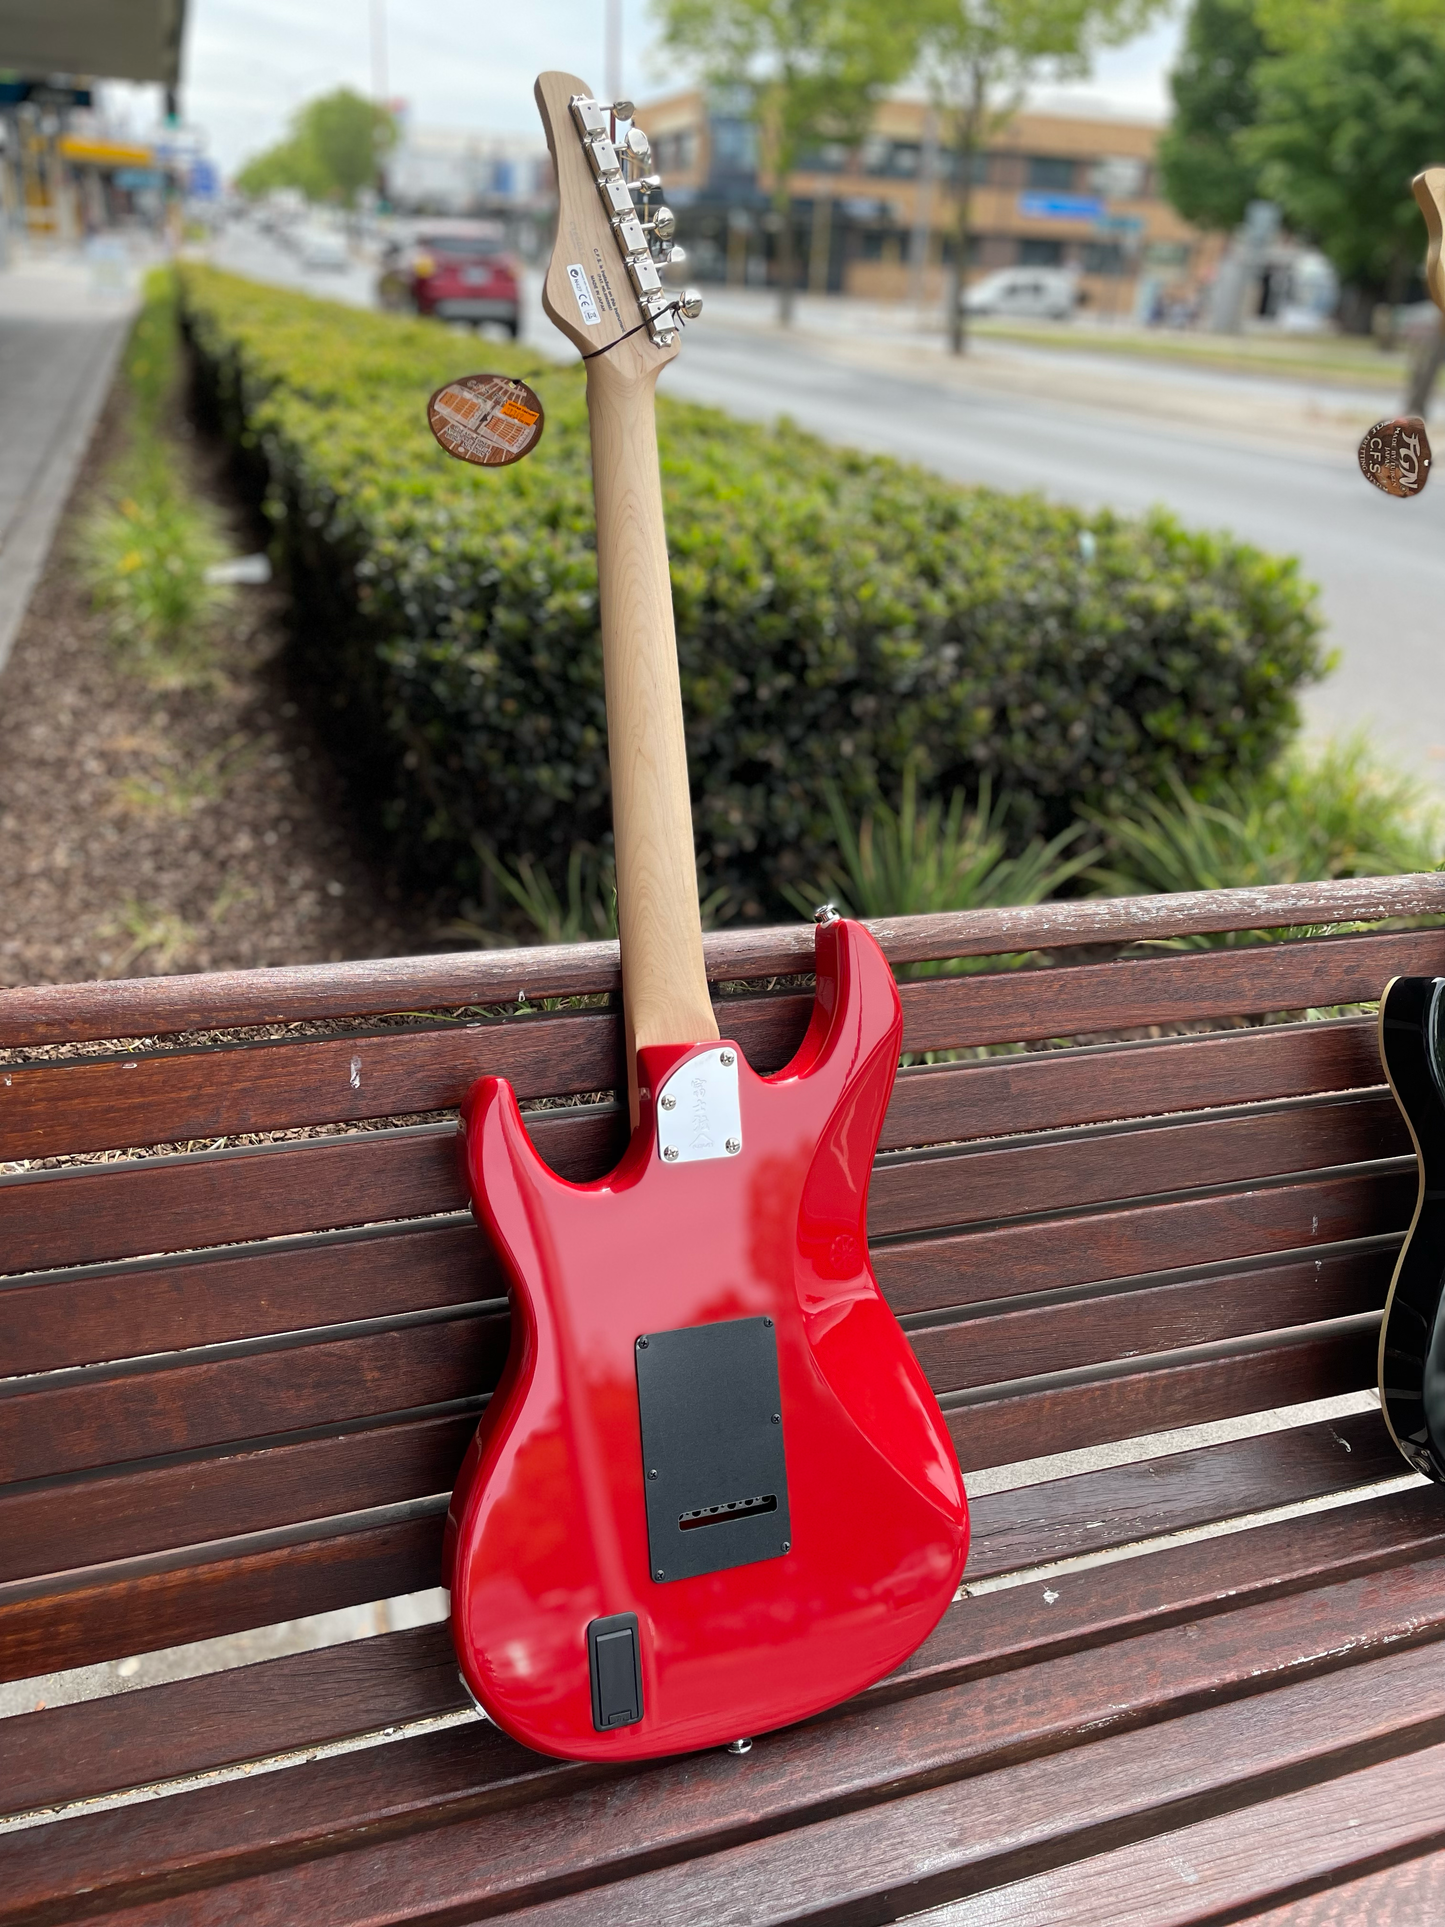 FGN Guitars J-Standard Series Odyssey w/EMG Pickups - Red Metallic